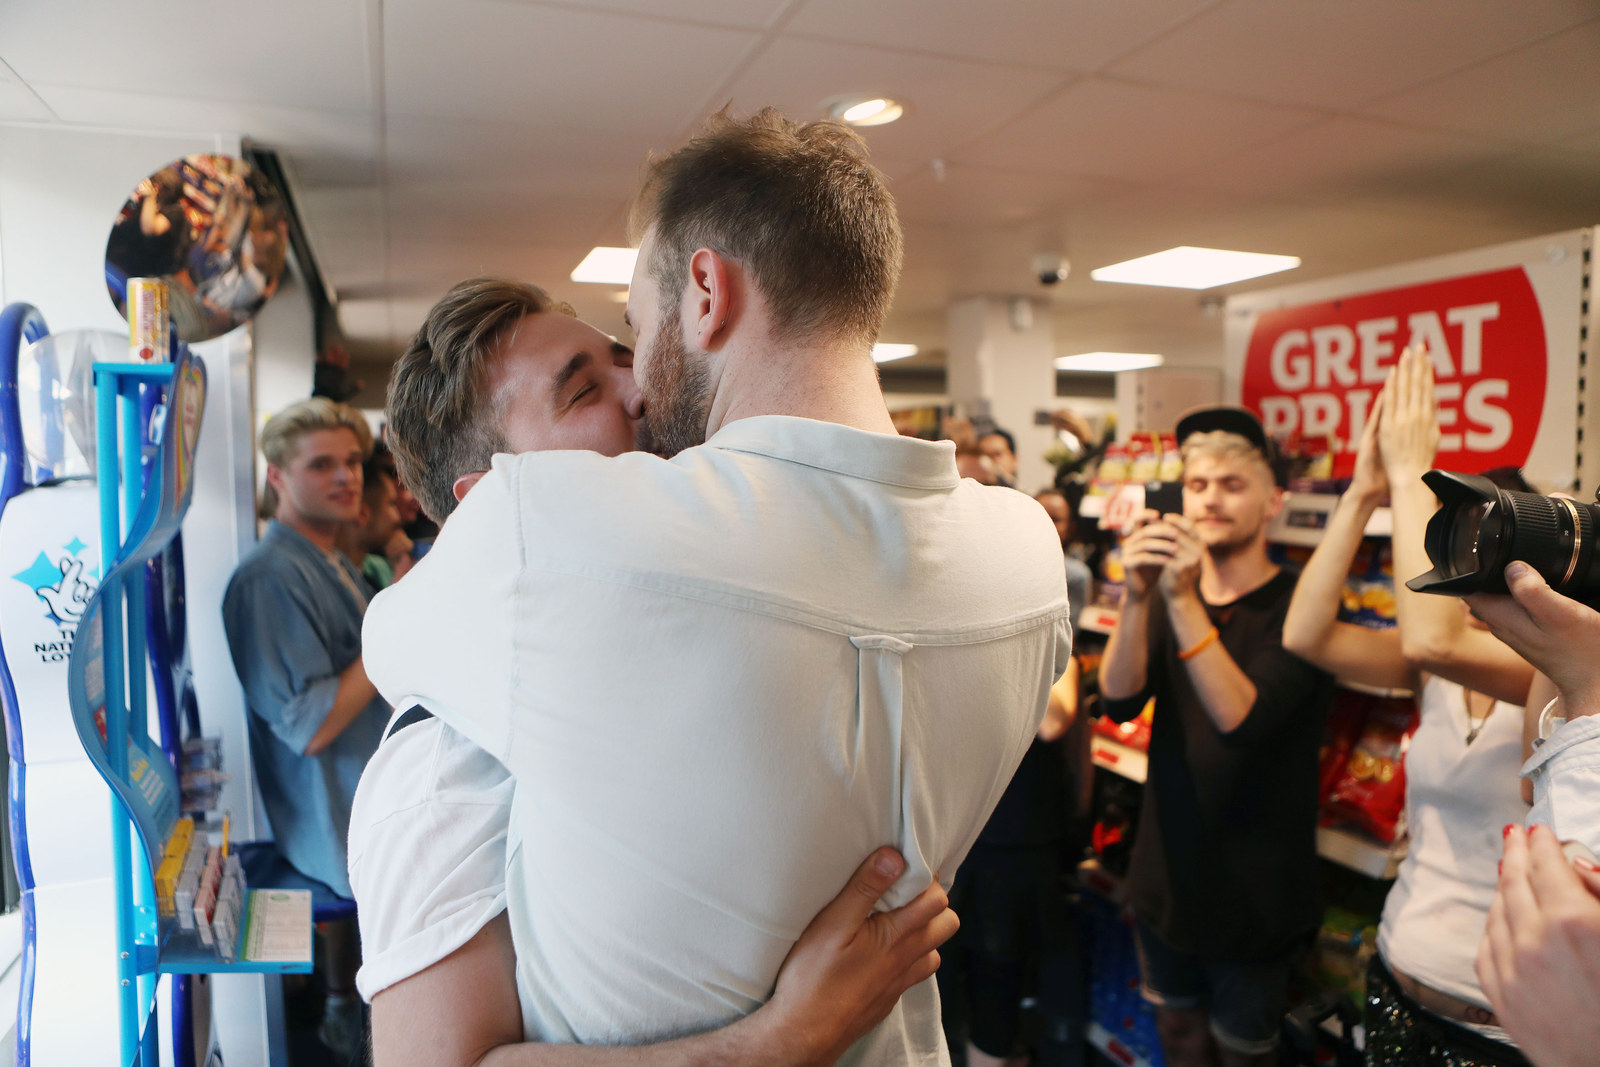 SameSex Couples Held A Big Gay KissIn Protest At A Supermarket